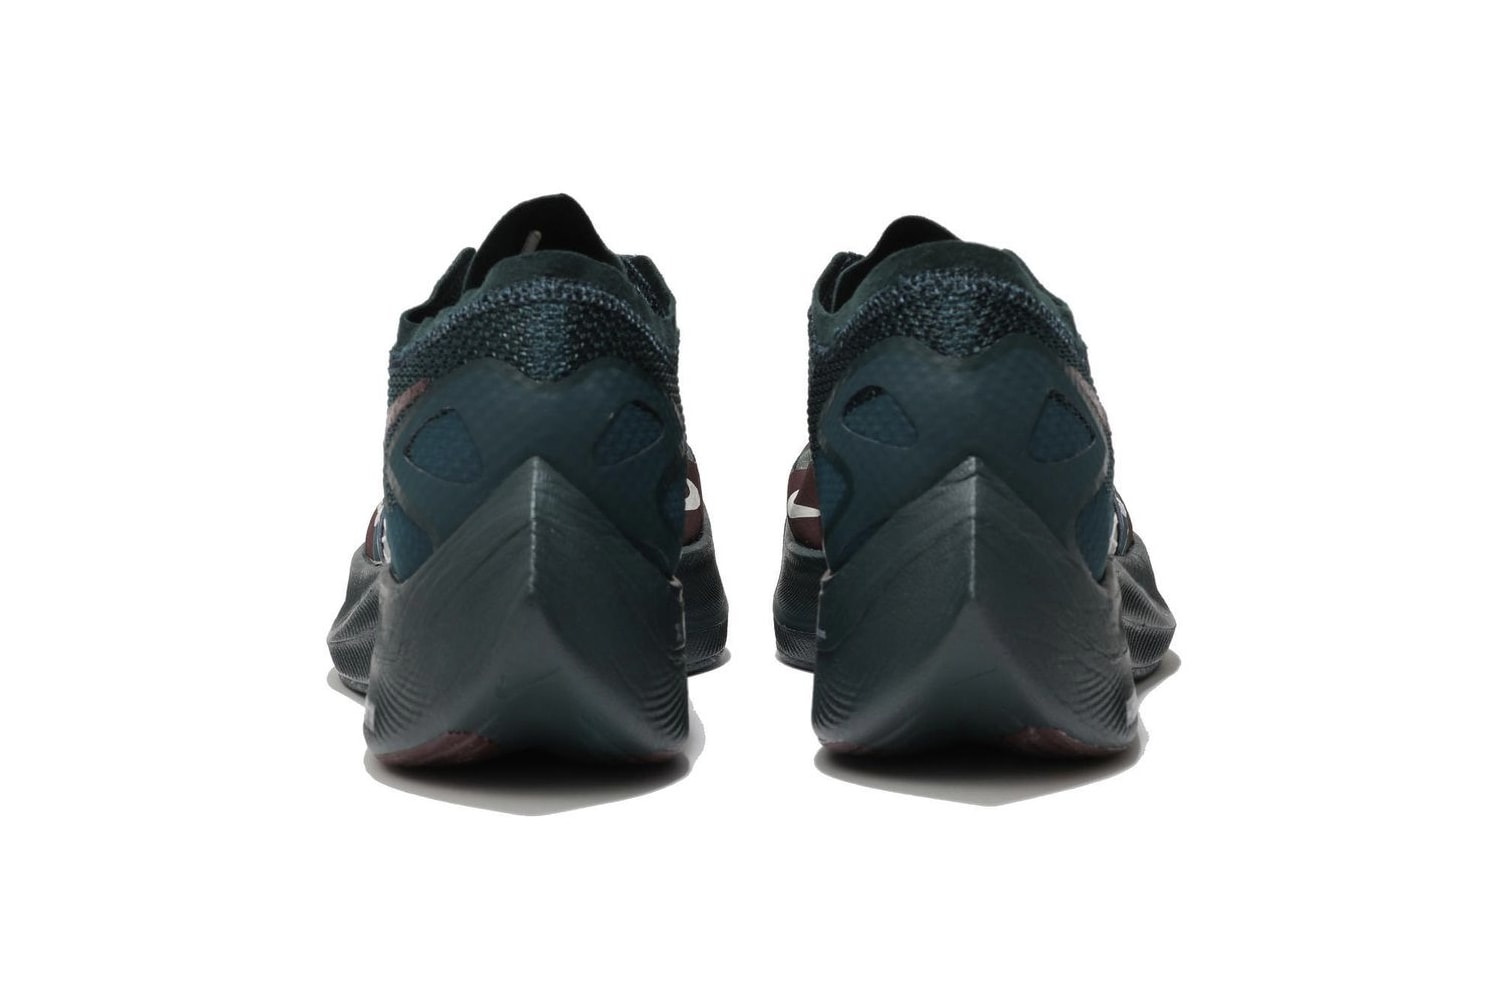 UNDERCOVER x Nike GYAKUSOU 最新聯名系列發售日期率先公開